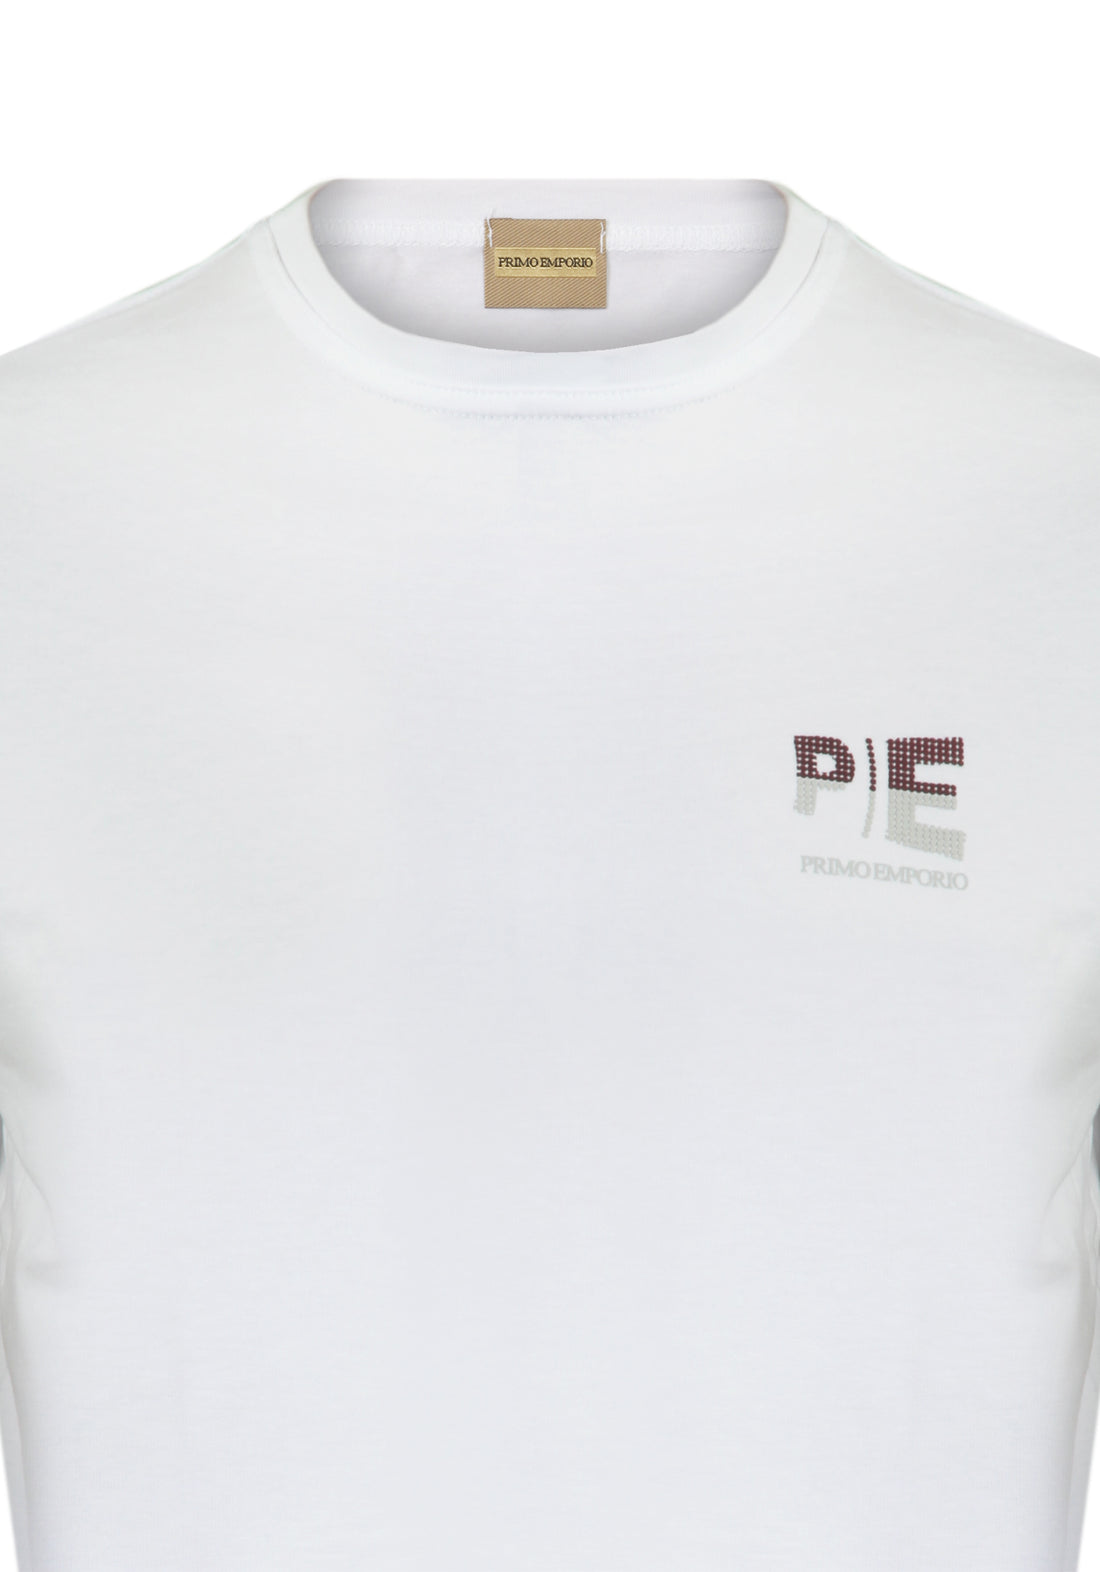 Half Sleeve Elastic T-Shirt with Print - White -